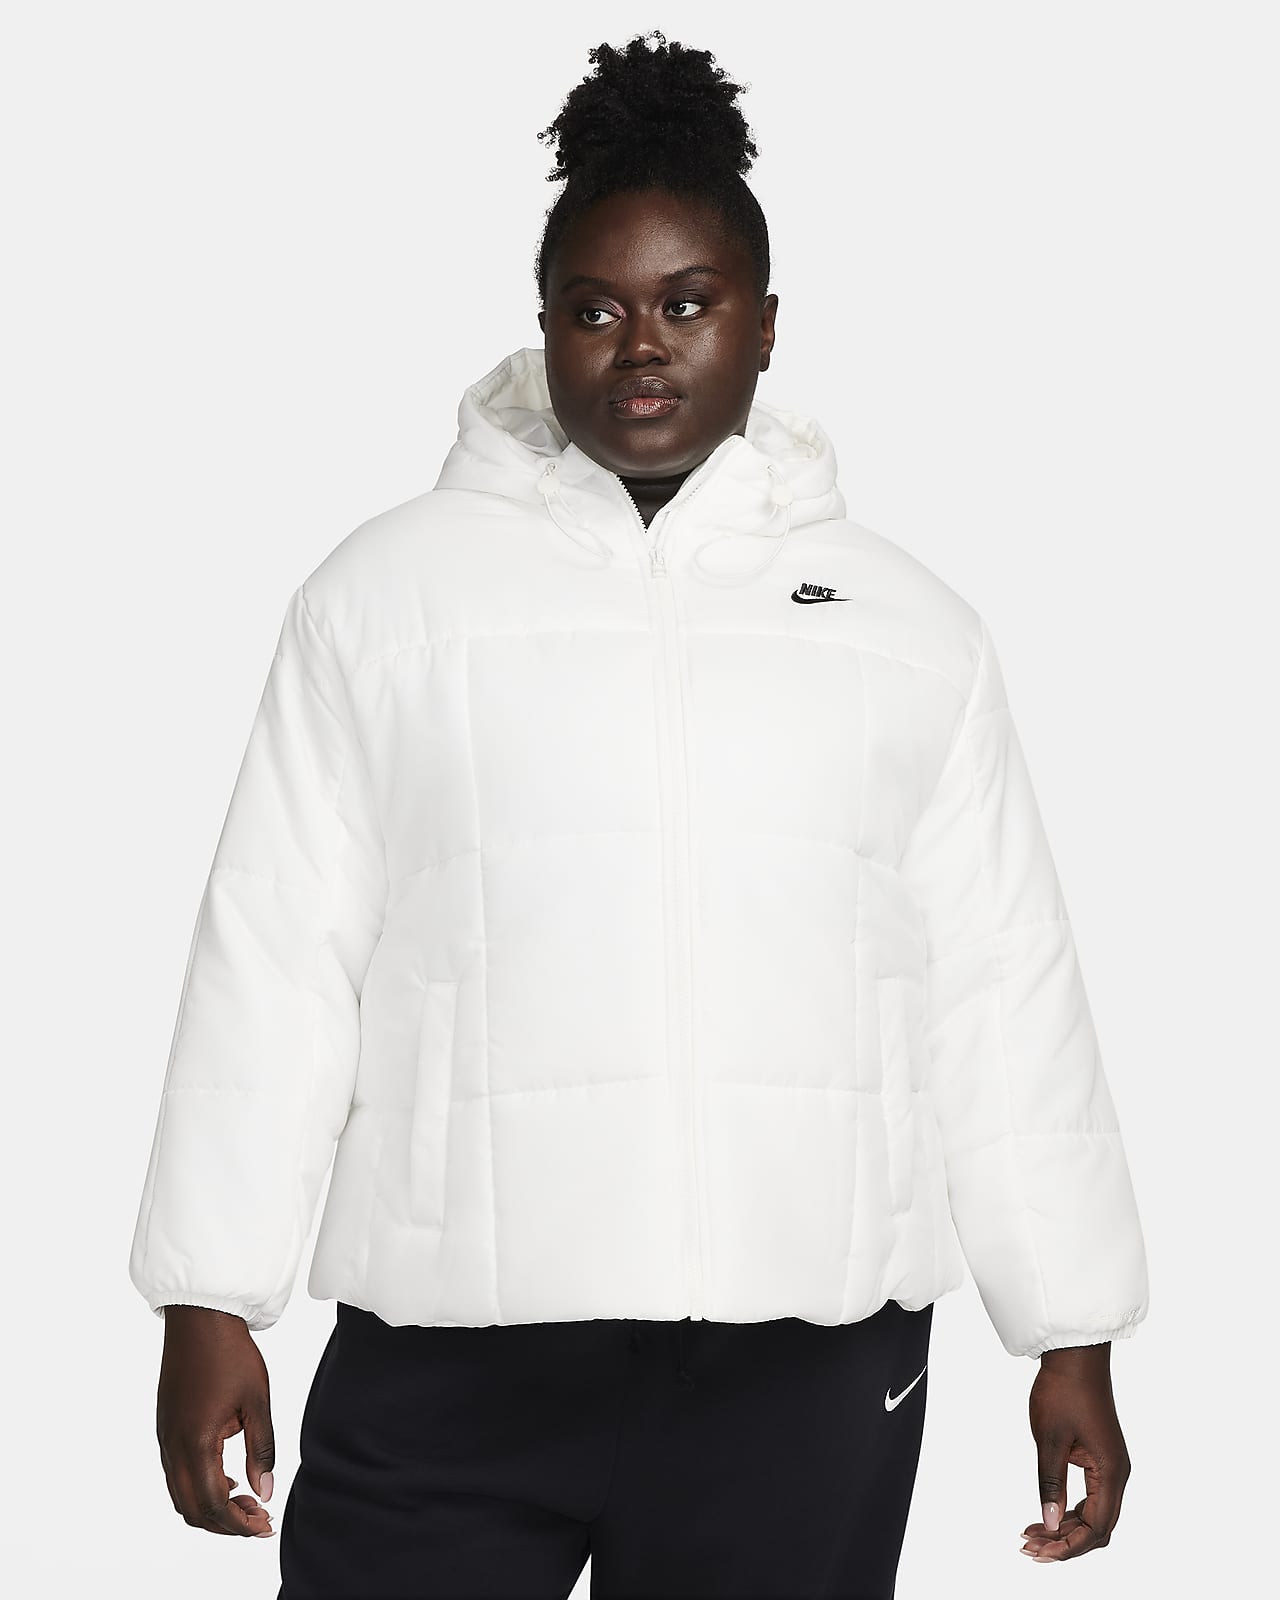 Nike - Doudoune Capuche Down-Fill Noir Blanc